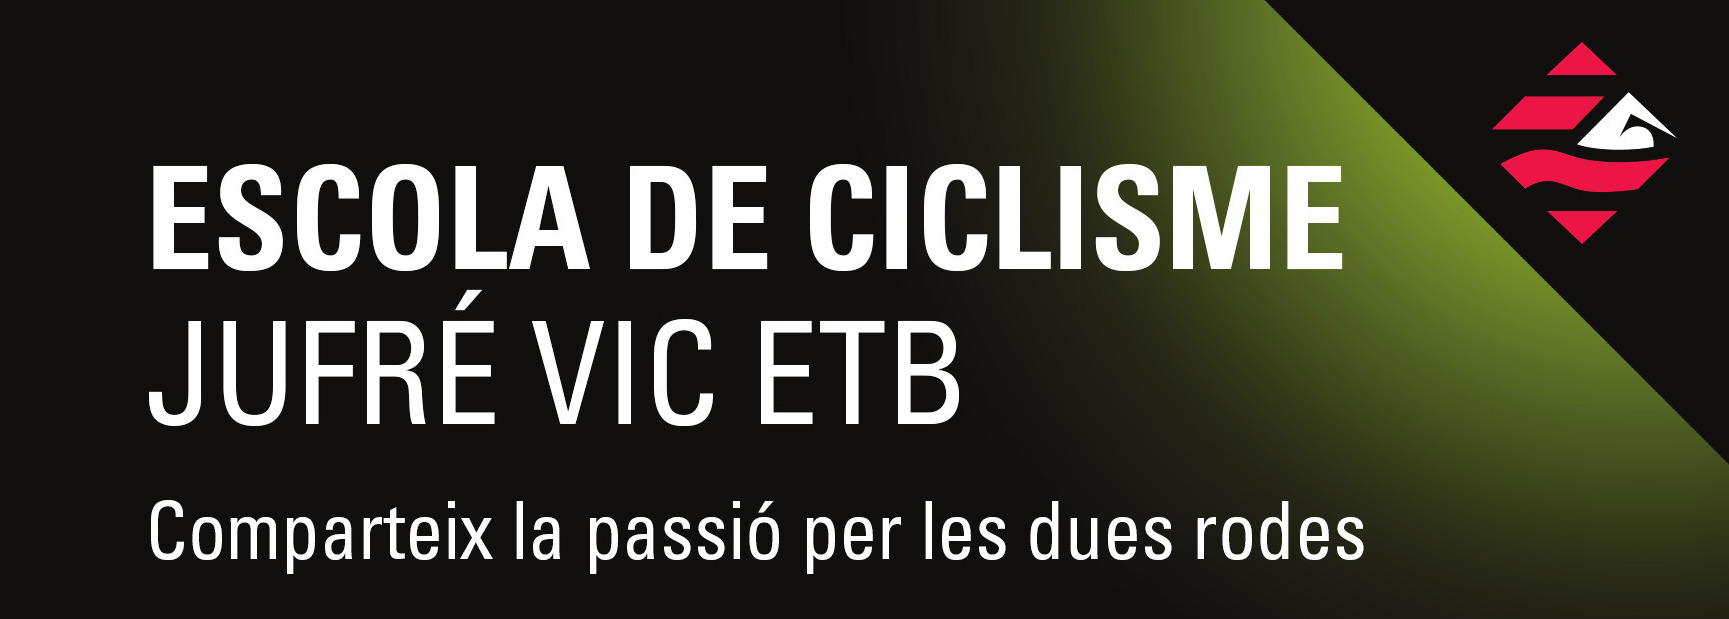 Banner_Escola_Ciclisme.jpg